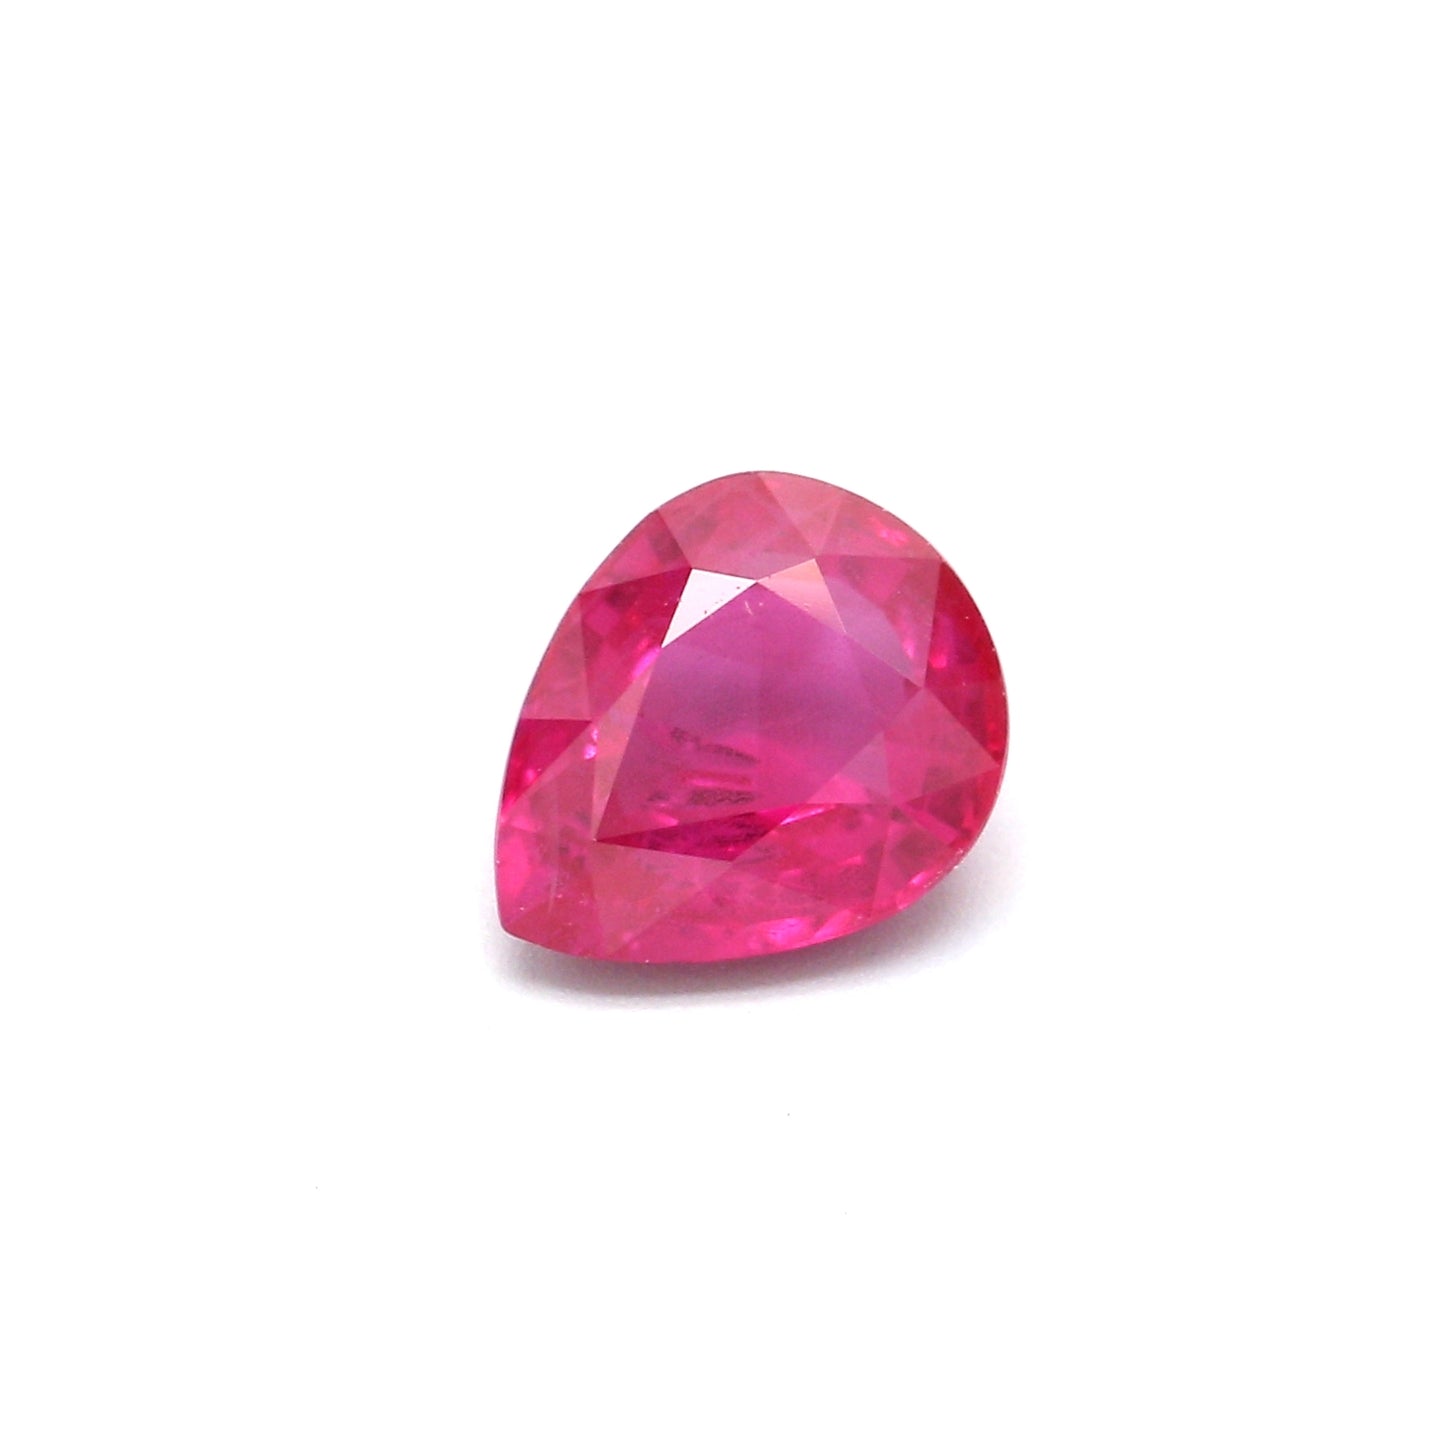 0.82ct Pear Shape Ruby, H(a), Myanmar - 6.56 x 5.39 x 2.91mm